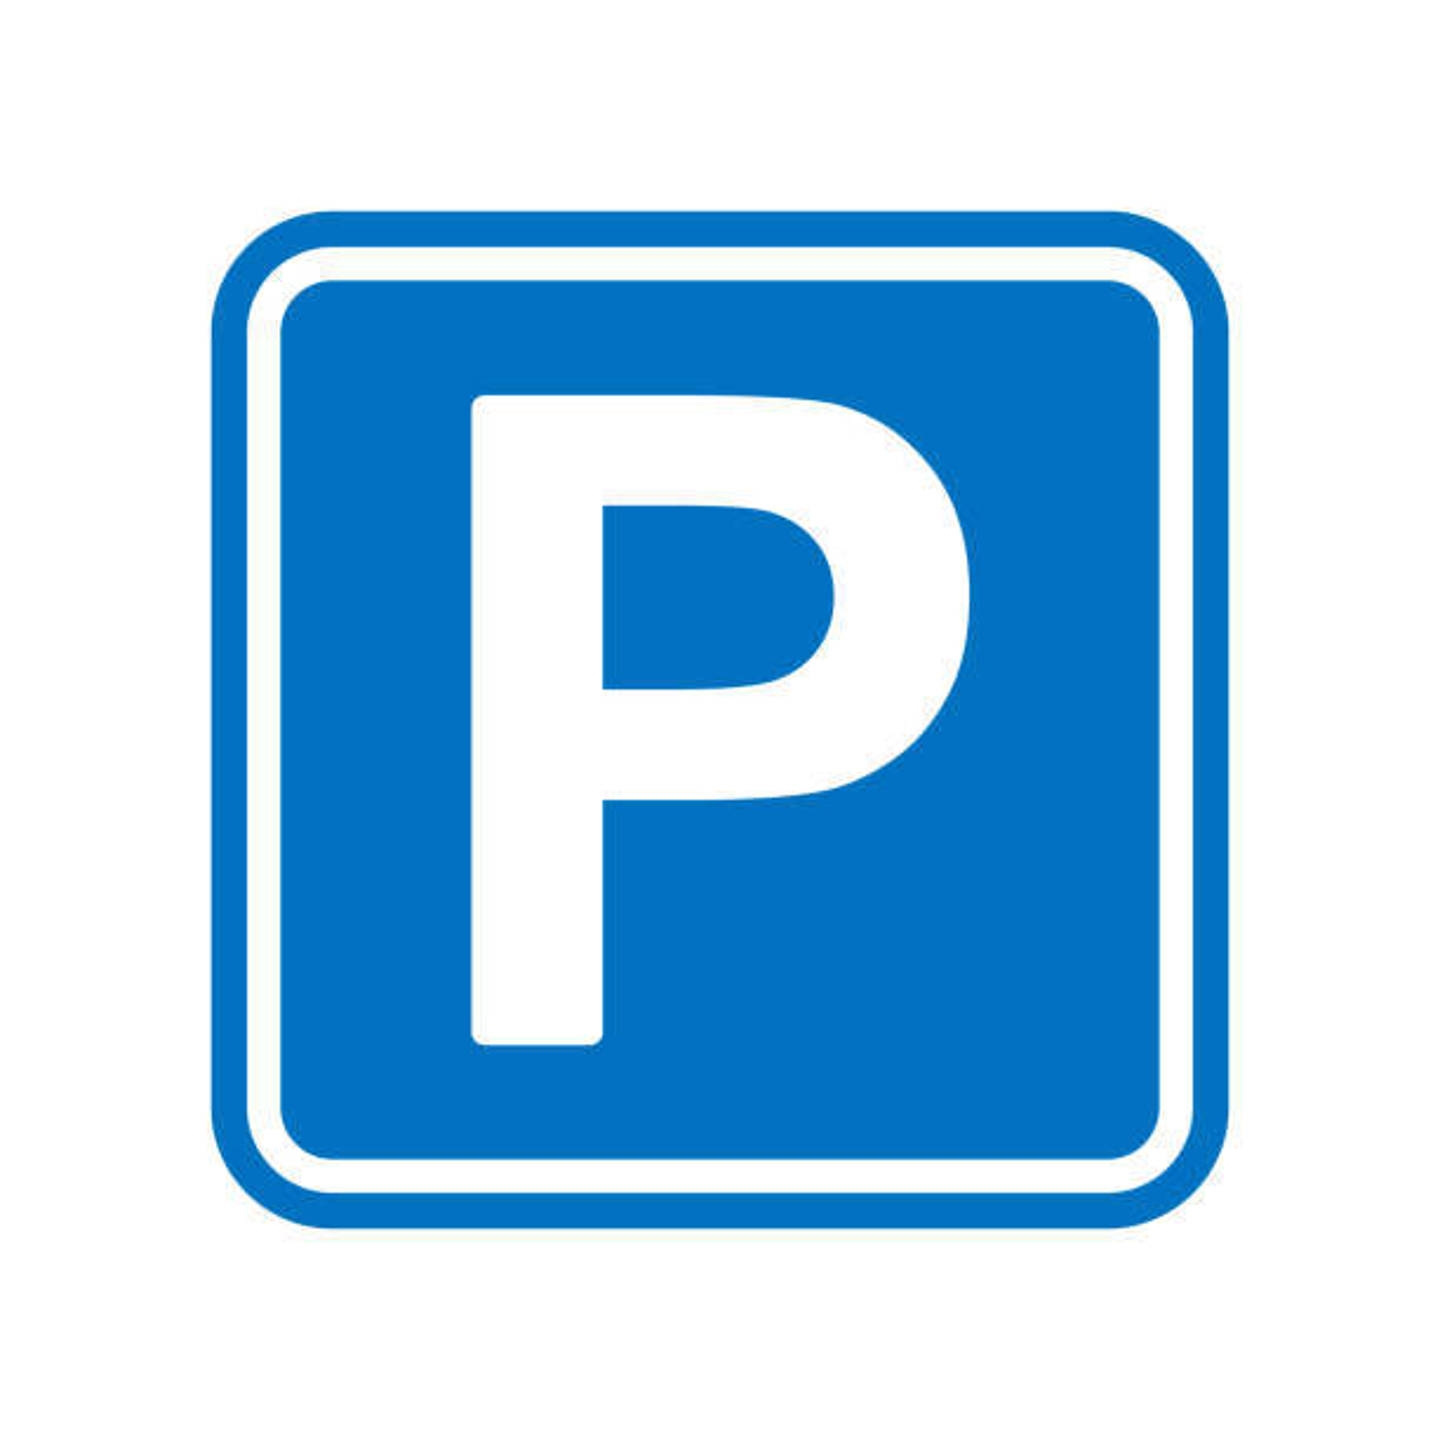 Parking te  koop in Sint-Jans-Molenbeek 1080 77250.00€  slaapkamers 12.50m² - Zoekertje 41287